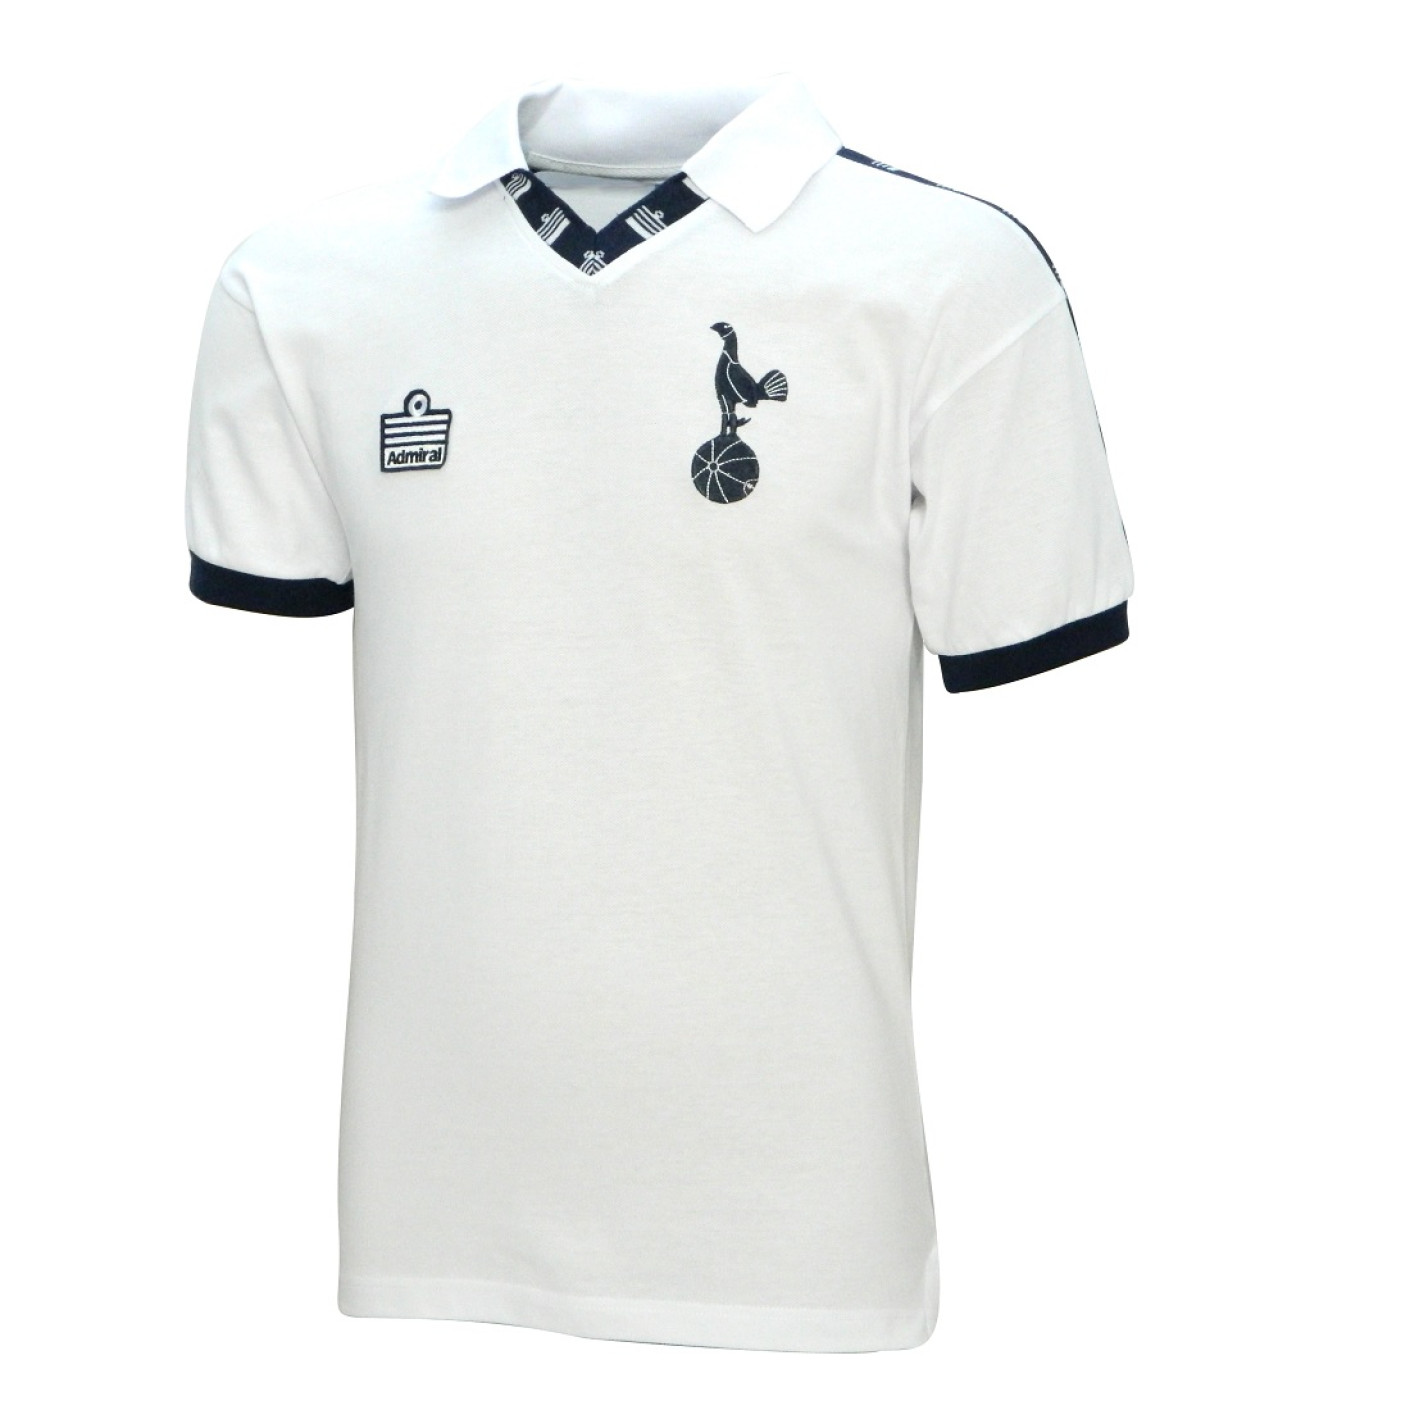 Tottenham Hotspur retro shirt 1977